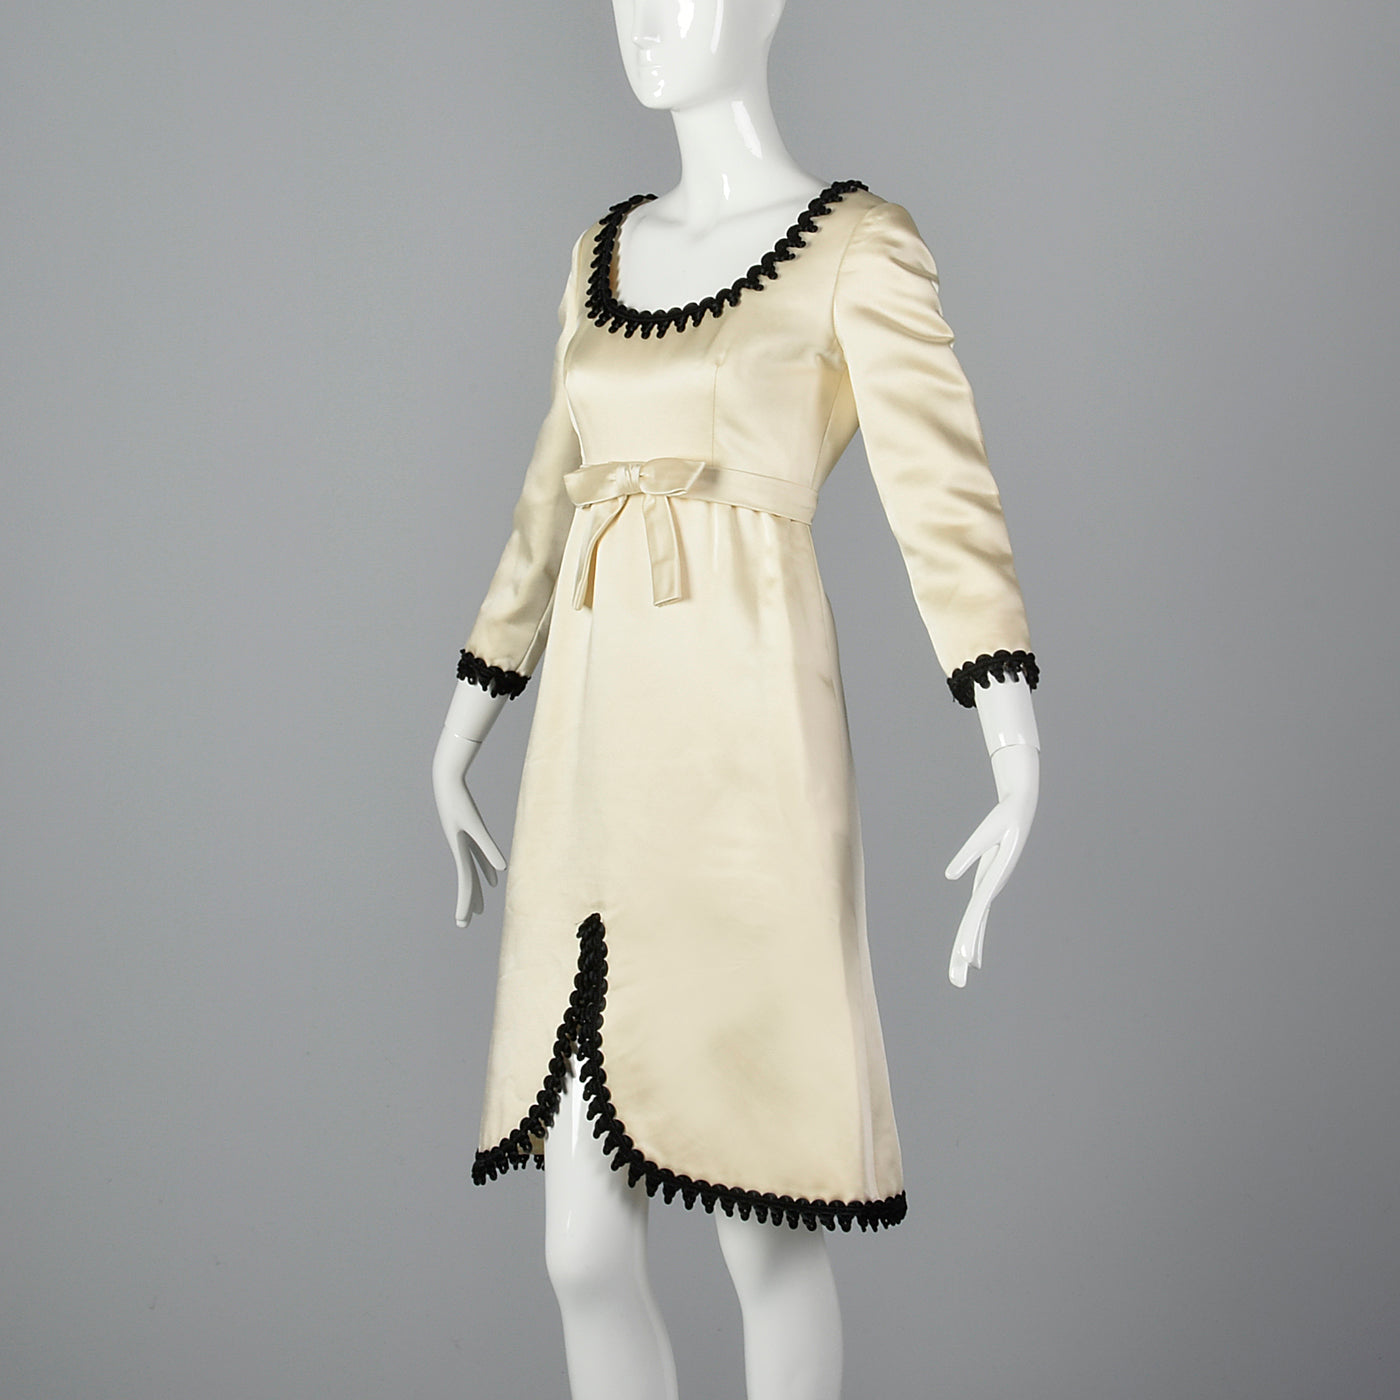 1960s Mollie Parnis White Satin Dress with Black Trim